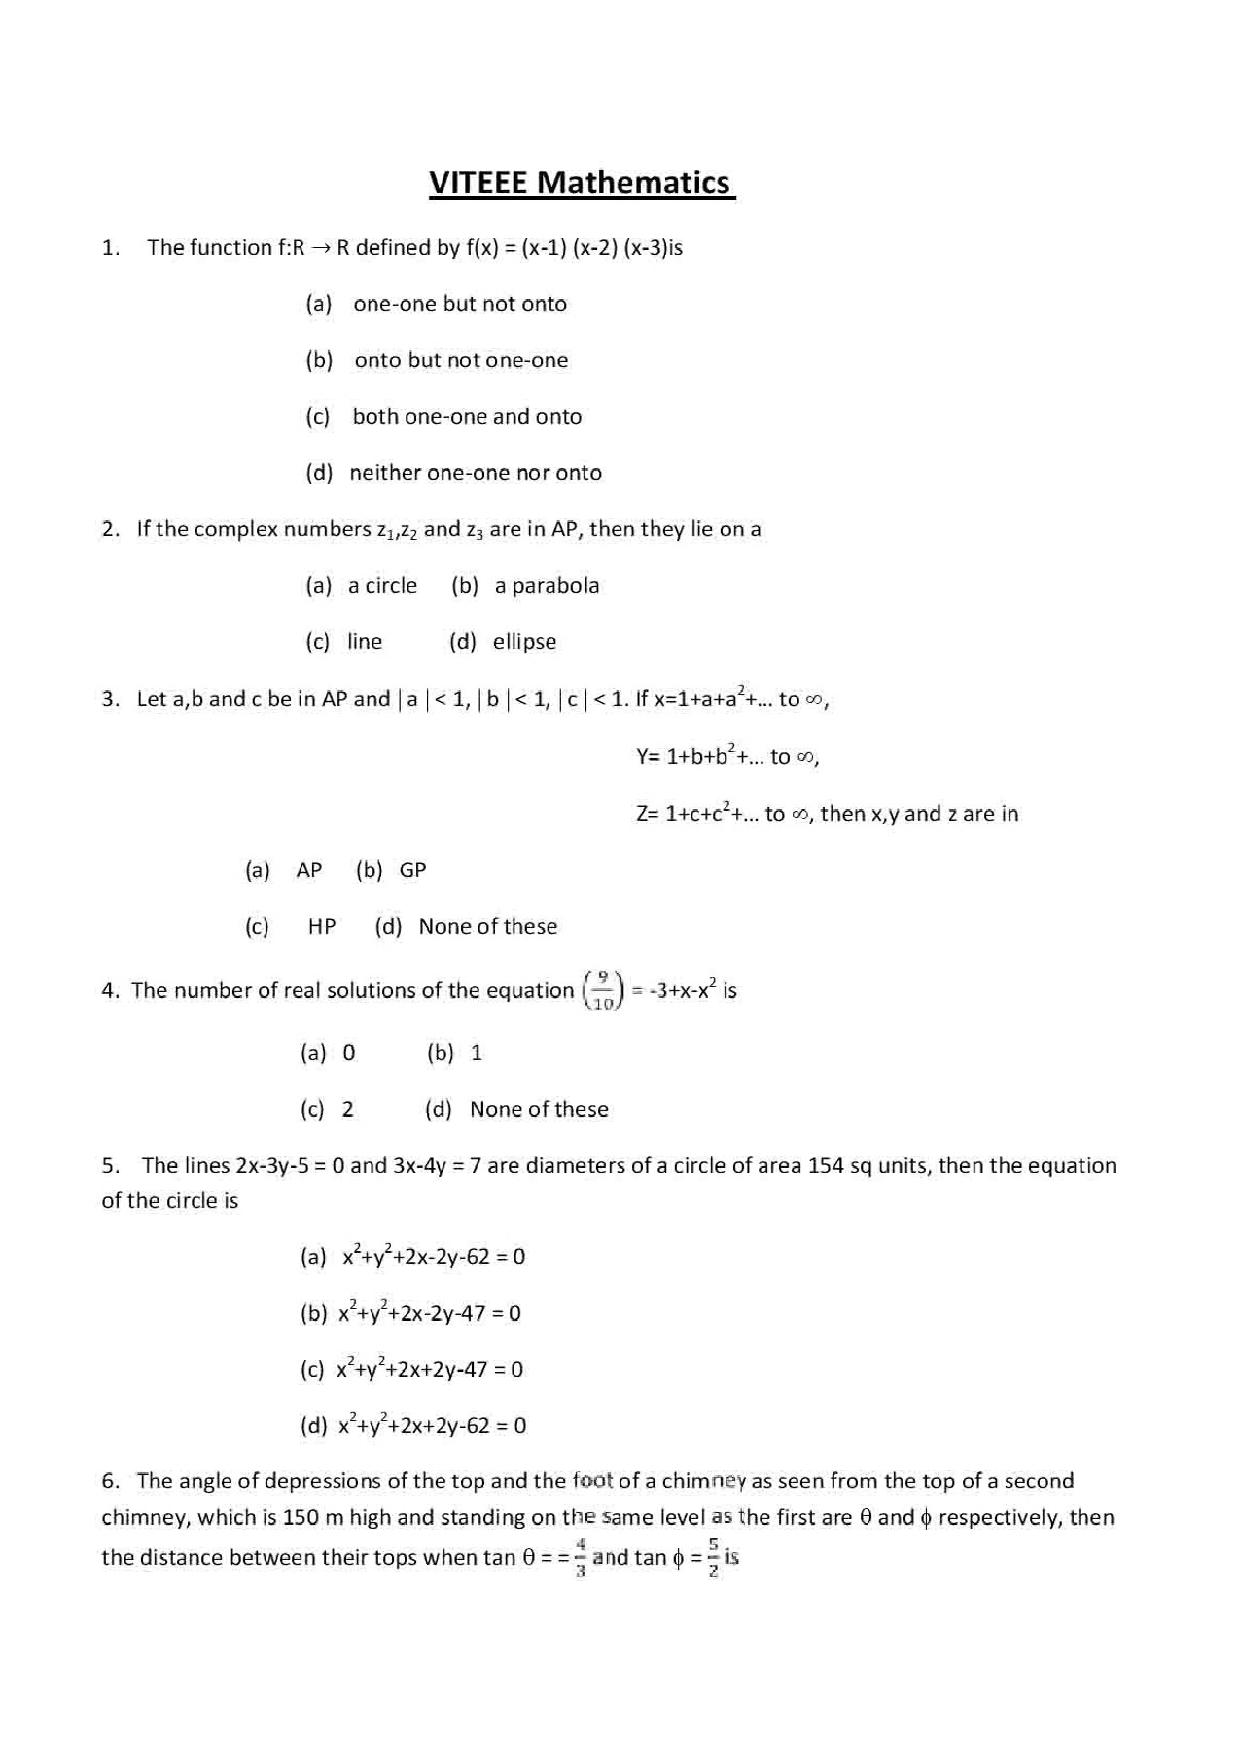 VITEEE Mathematics 2019 Question Paper